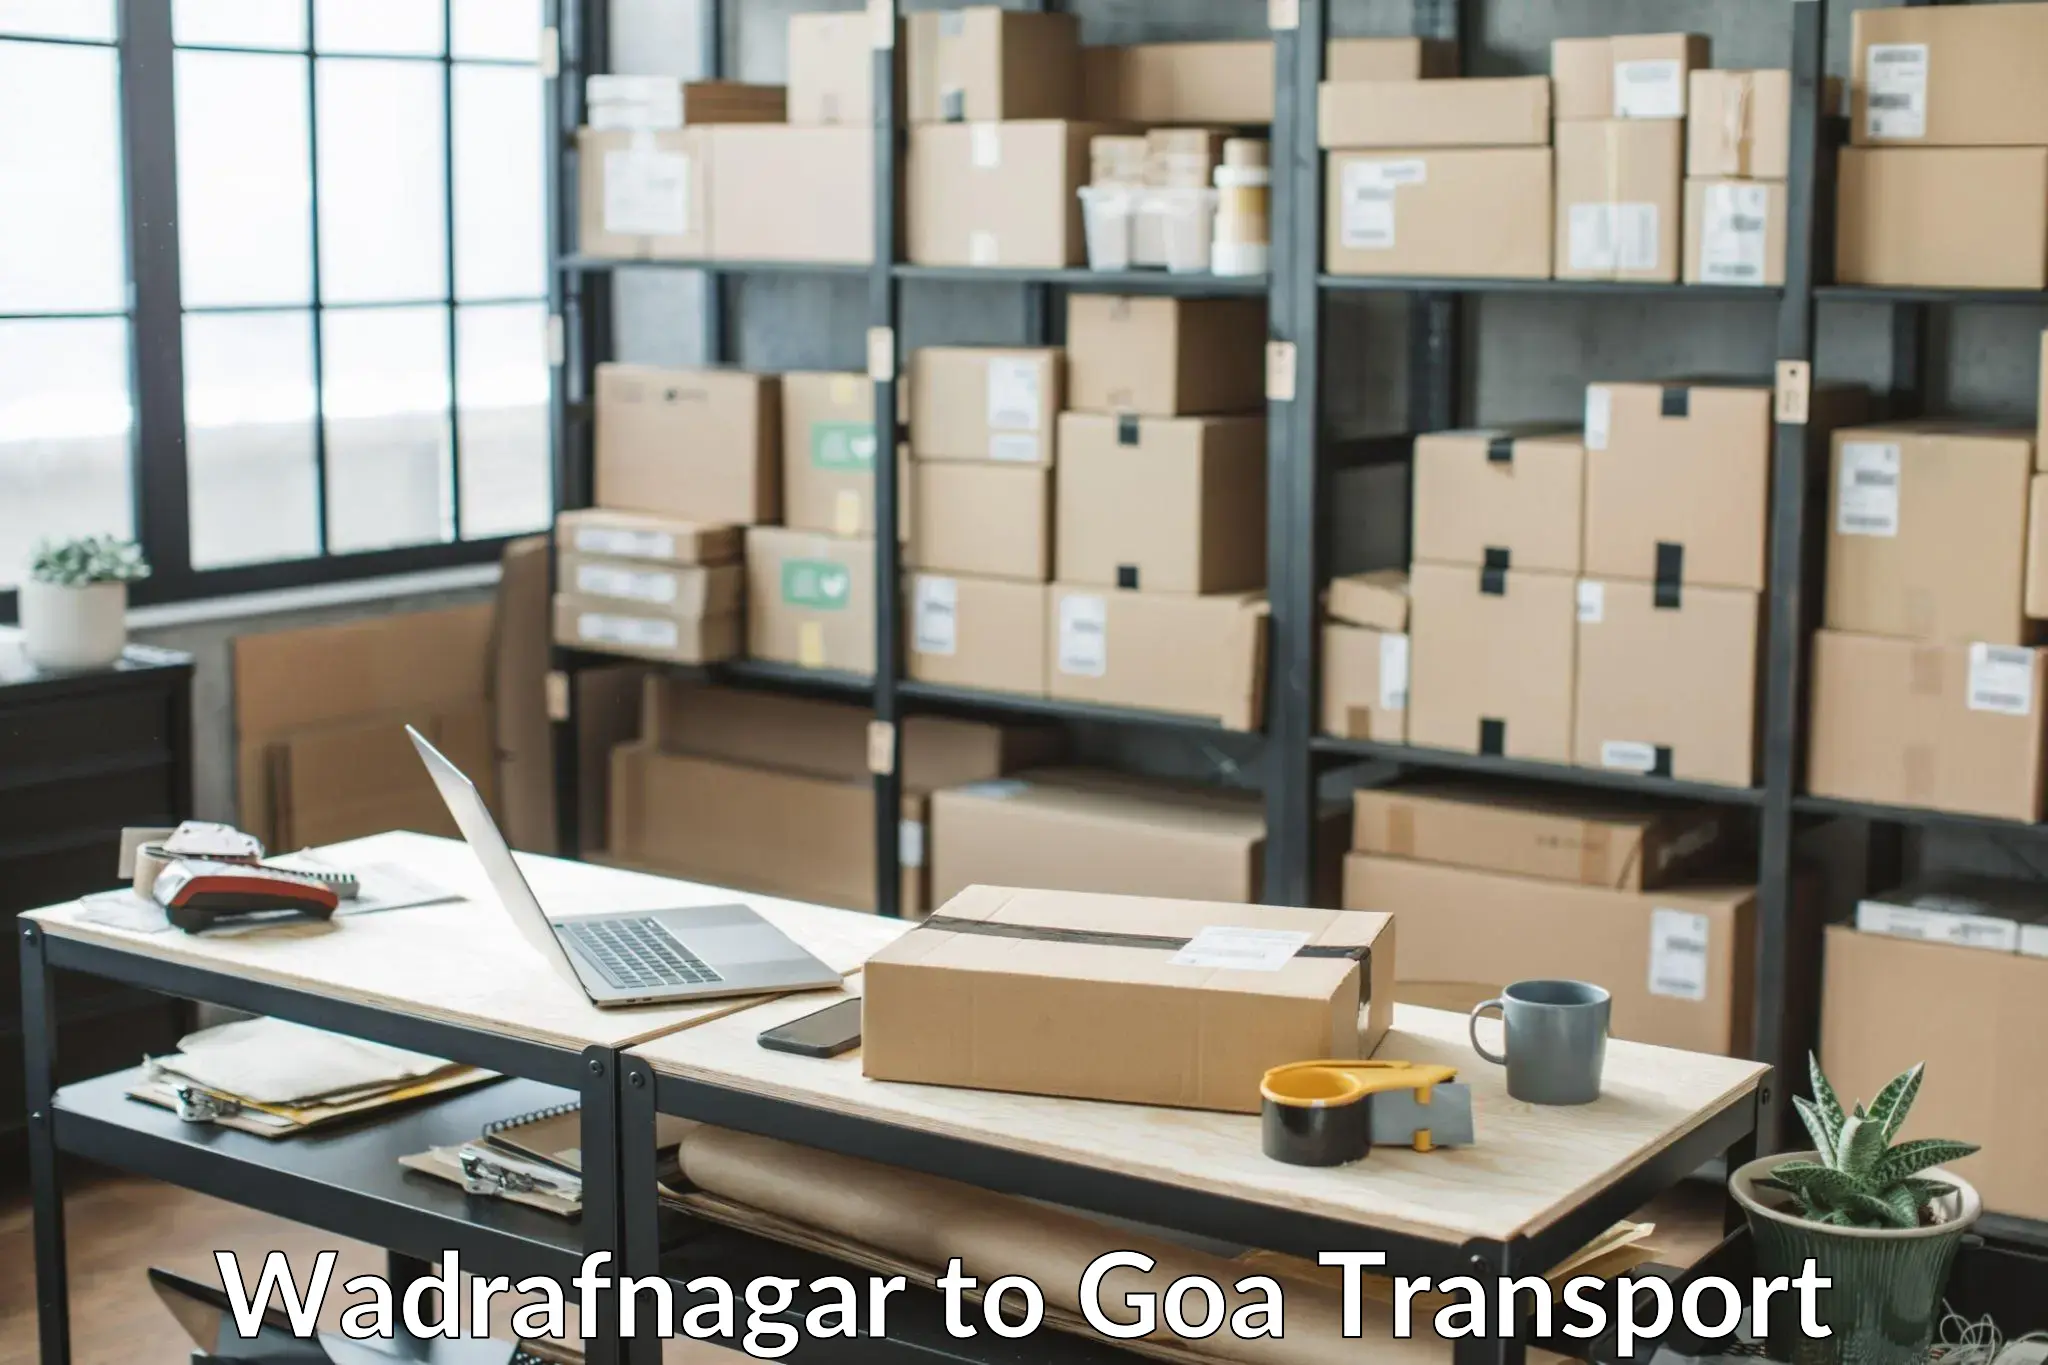 Bike transport service Wadrafnagar to IIT Goa